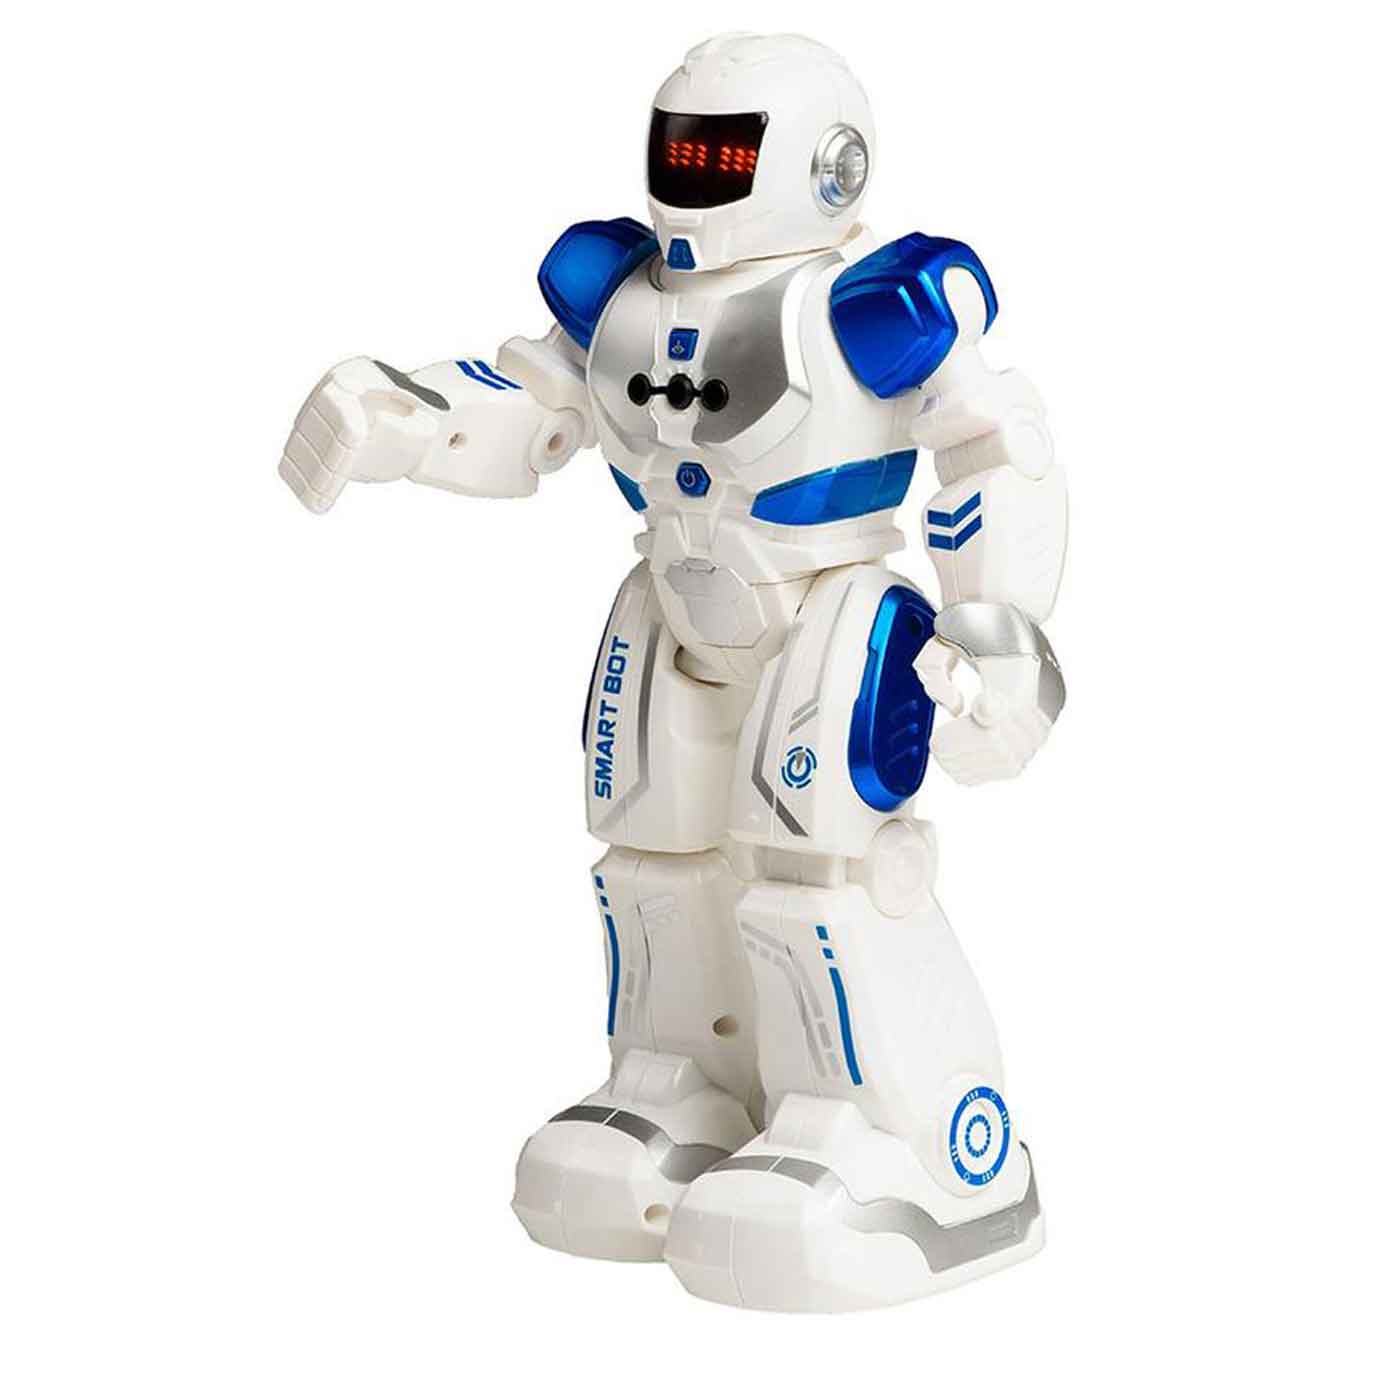 Xtrem Robot Smart Bot 26cm